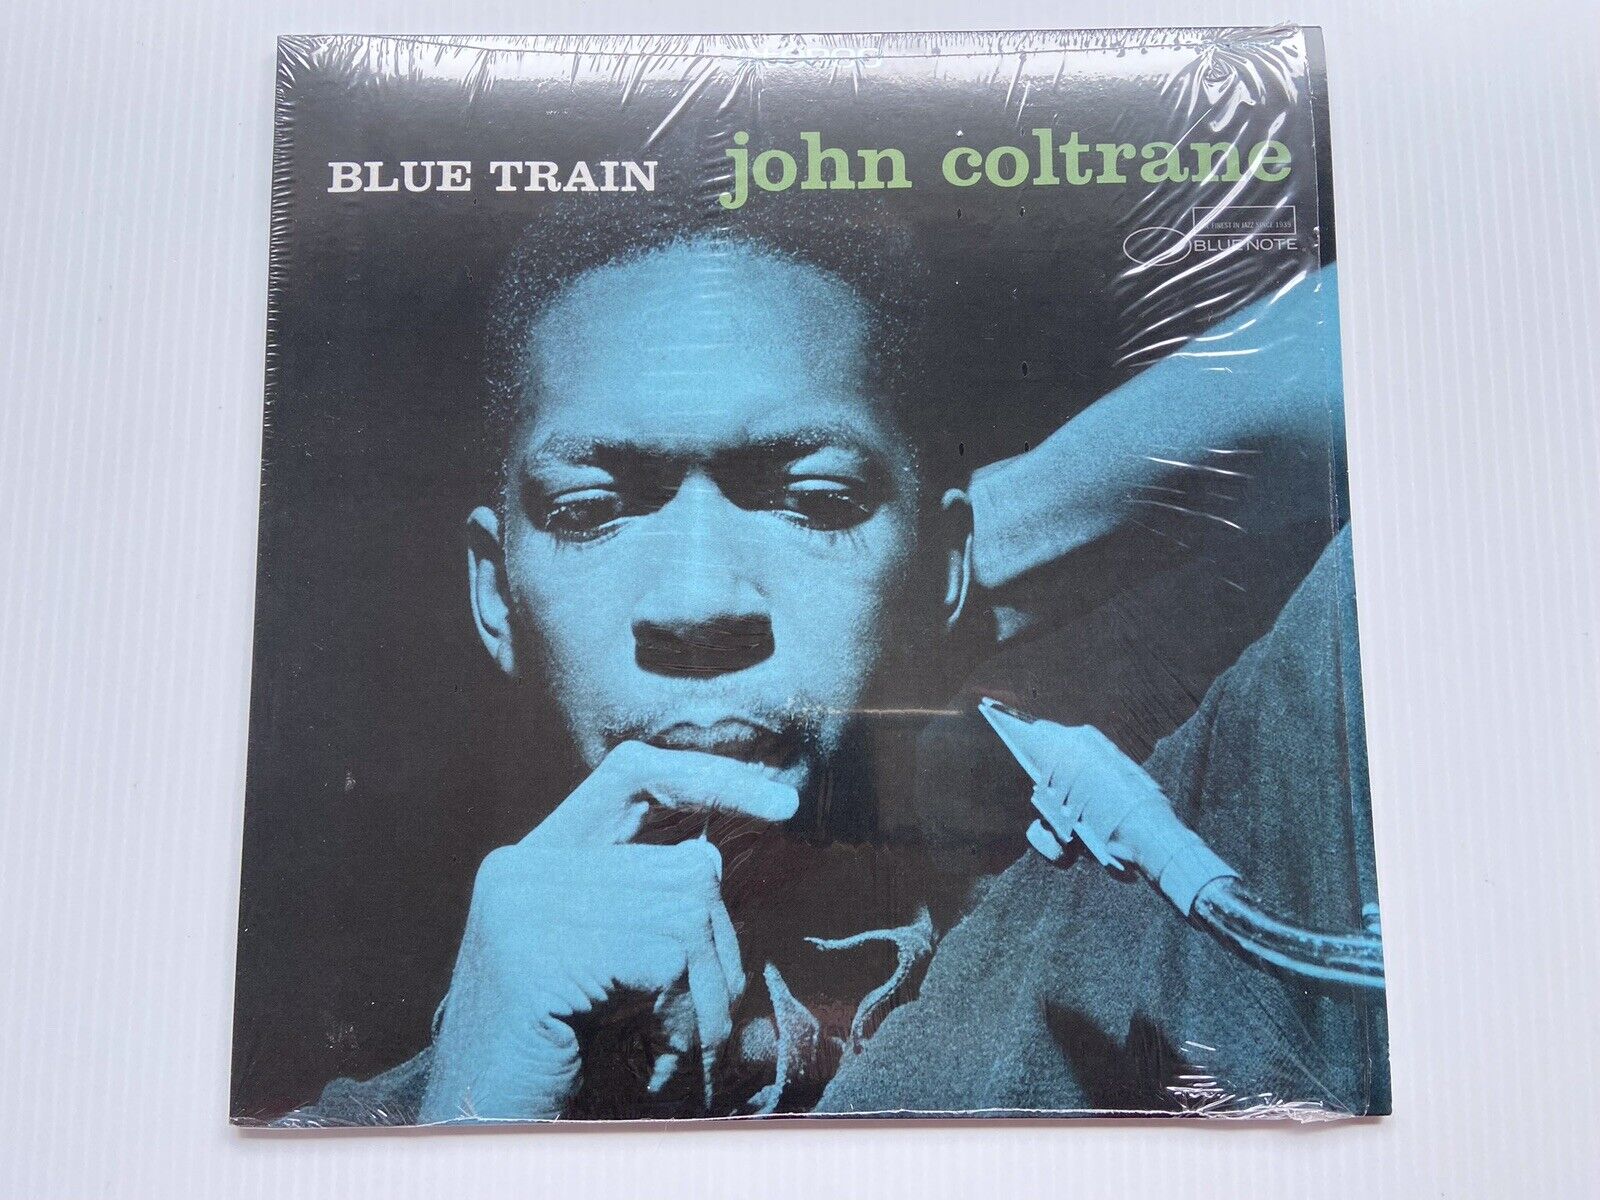 JOHN COLTRANE - BLUE TRAIN - VINYL LP - BLUE NOTE BST 81577 NM/NM 2016 UK 180g